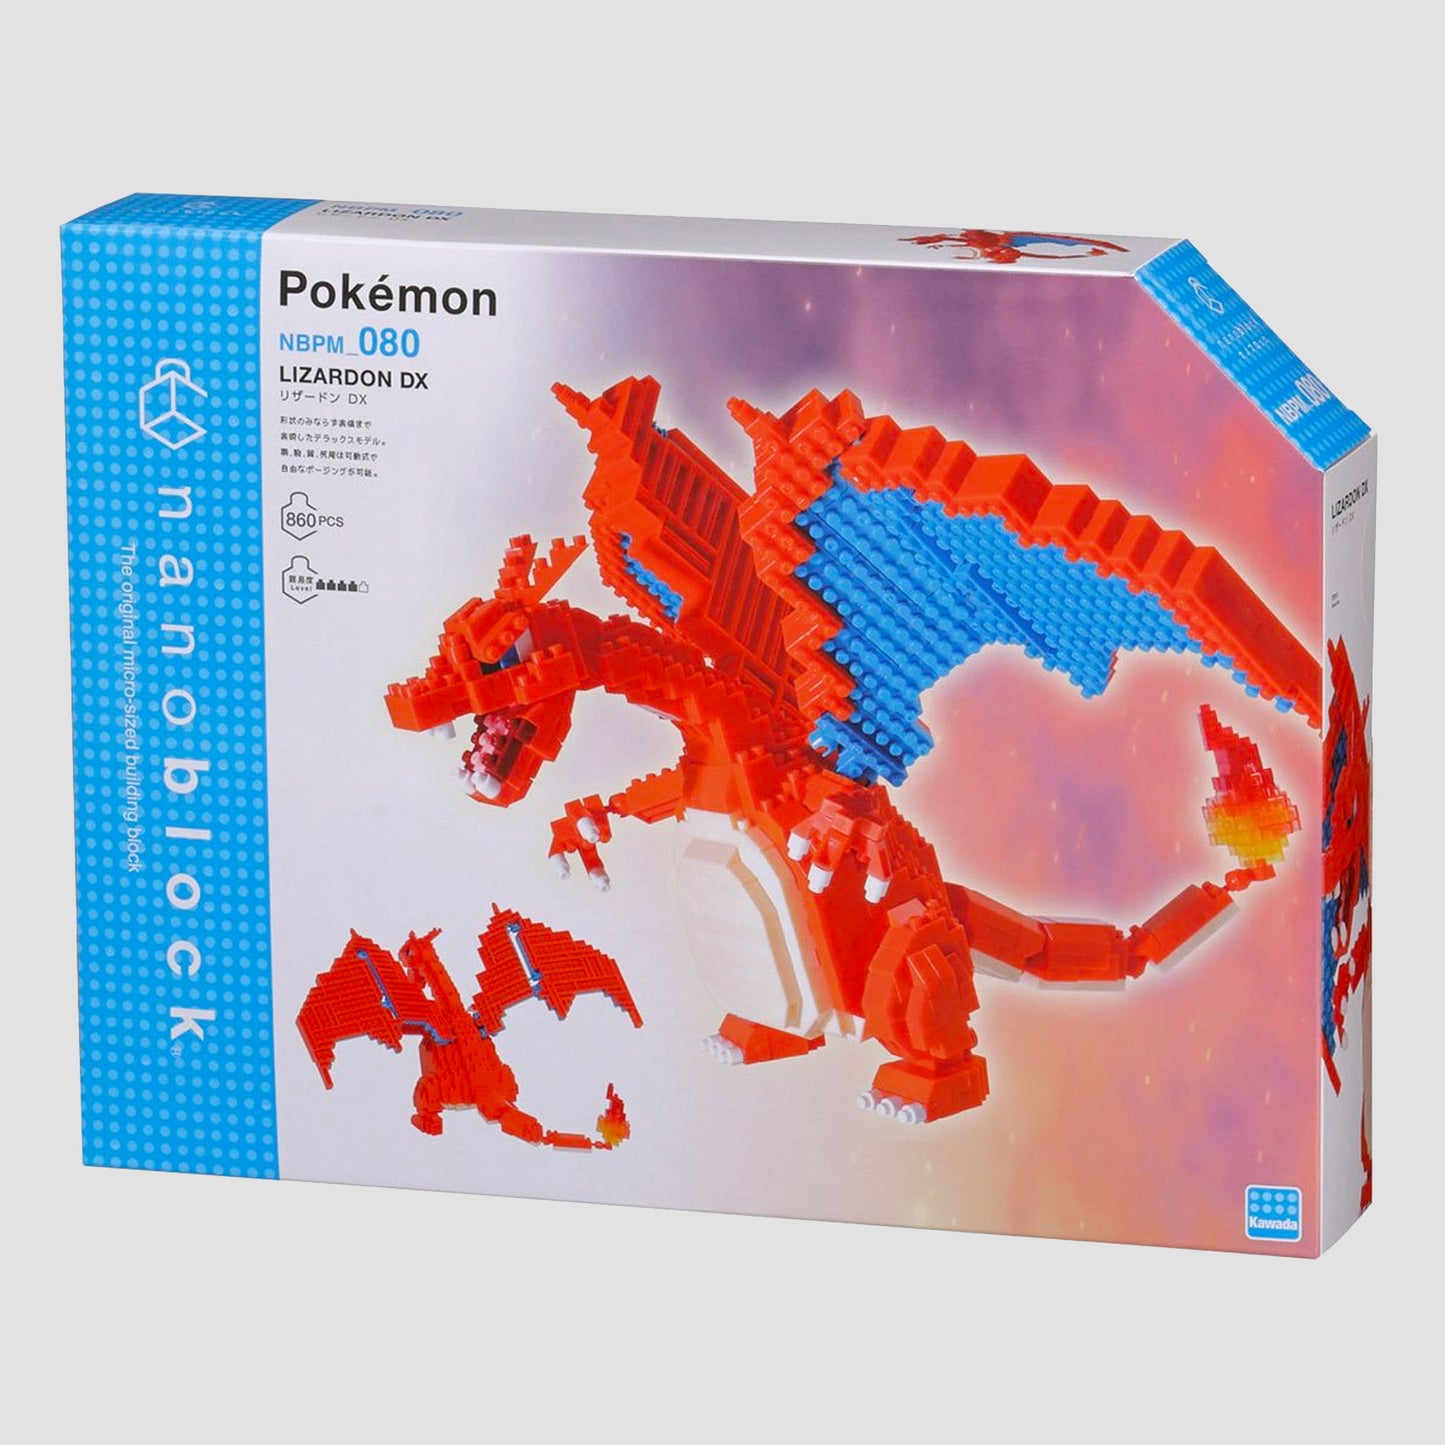 Charizard (Pokemon) Deluxe Edition Nanoblock Model Building Kit